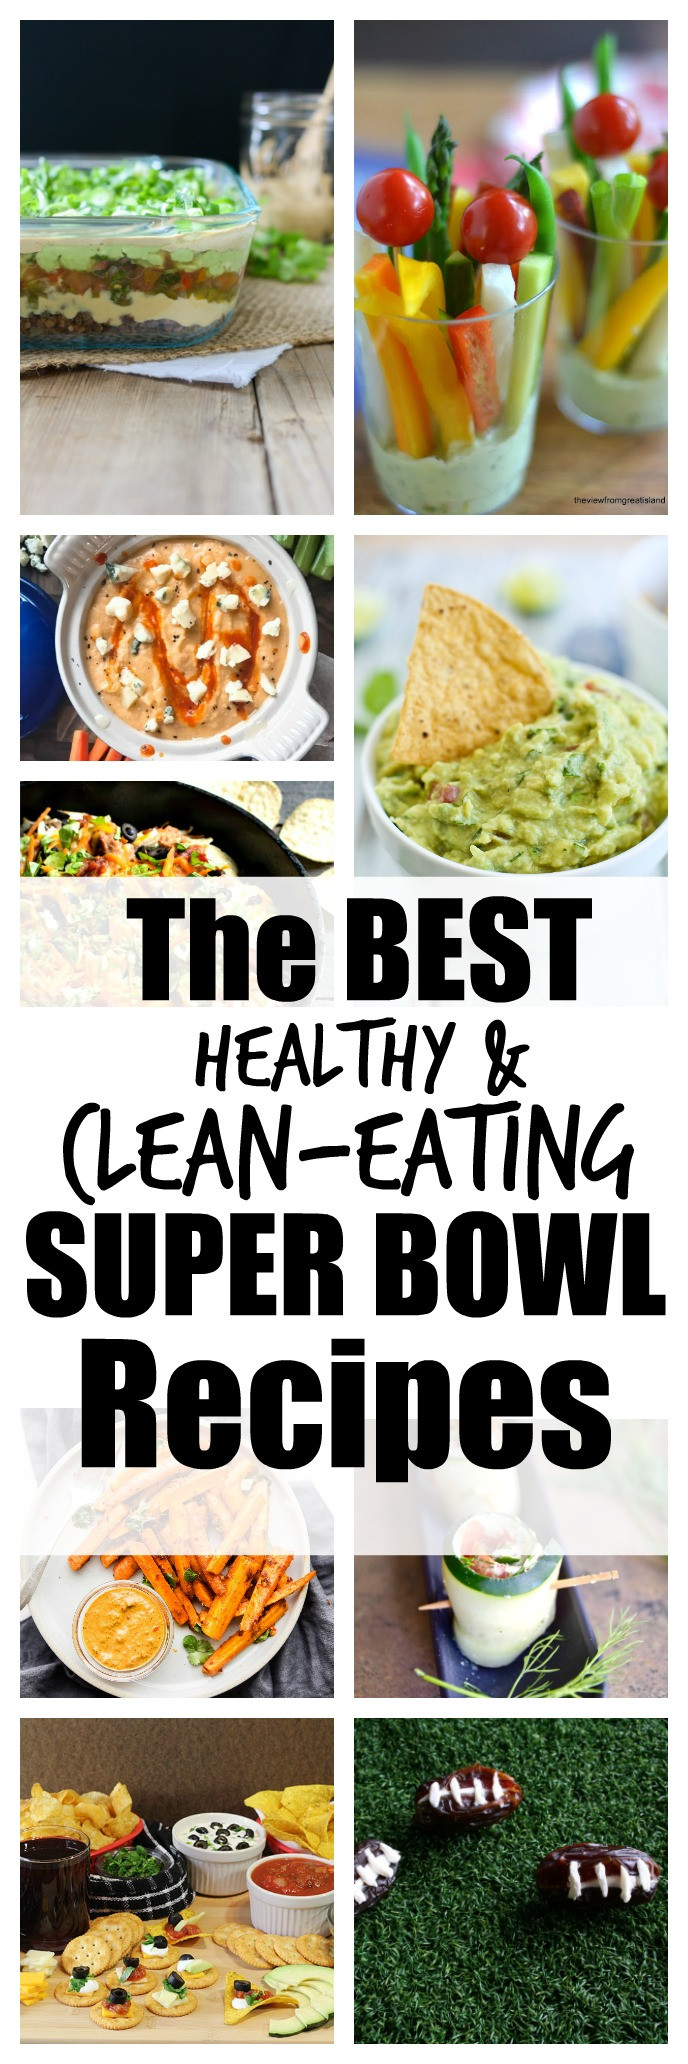 Healthy Super Bowl Recipes
 Healthy and Clean Eating Super Bowl Recipes Happy